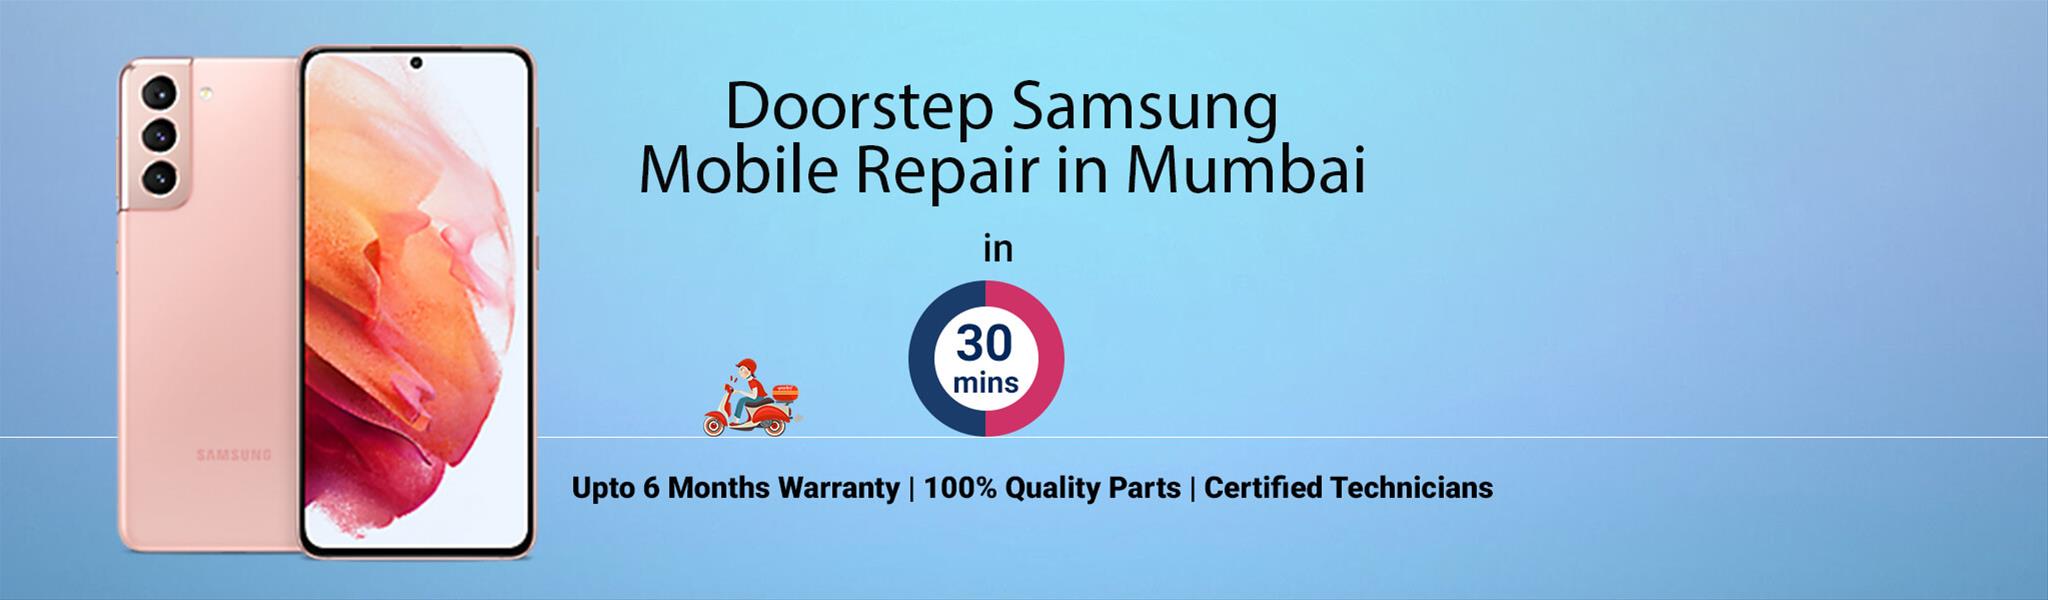 samsung-repair-service-banner-mumbai.jpg